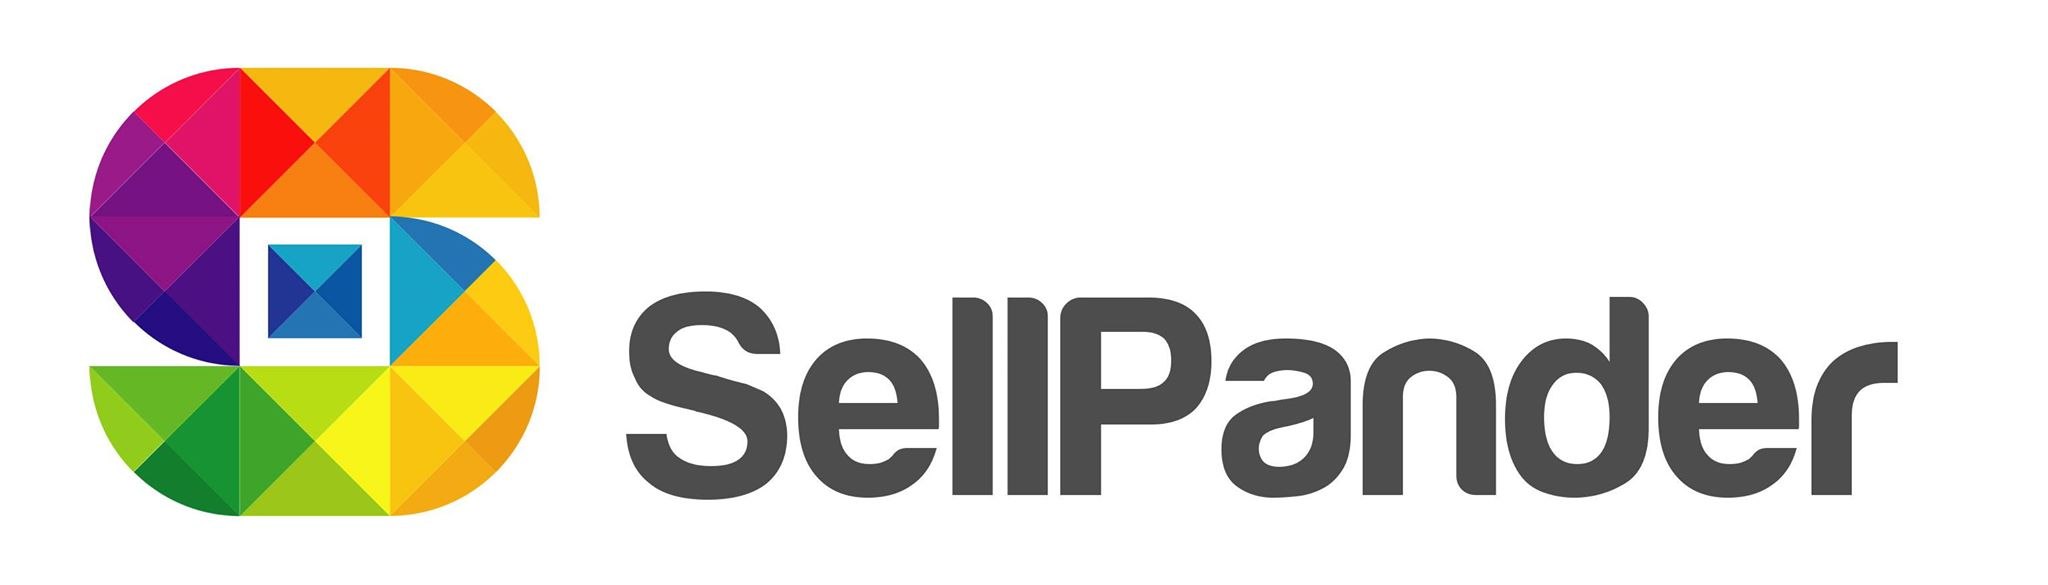 sellpander_logo.jpg